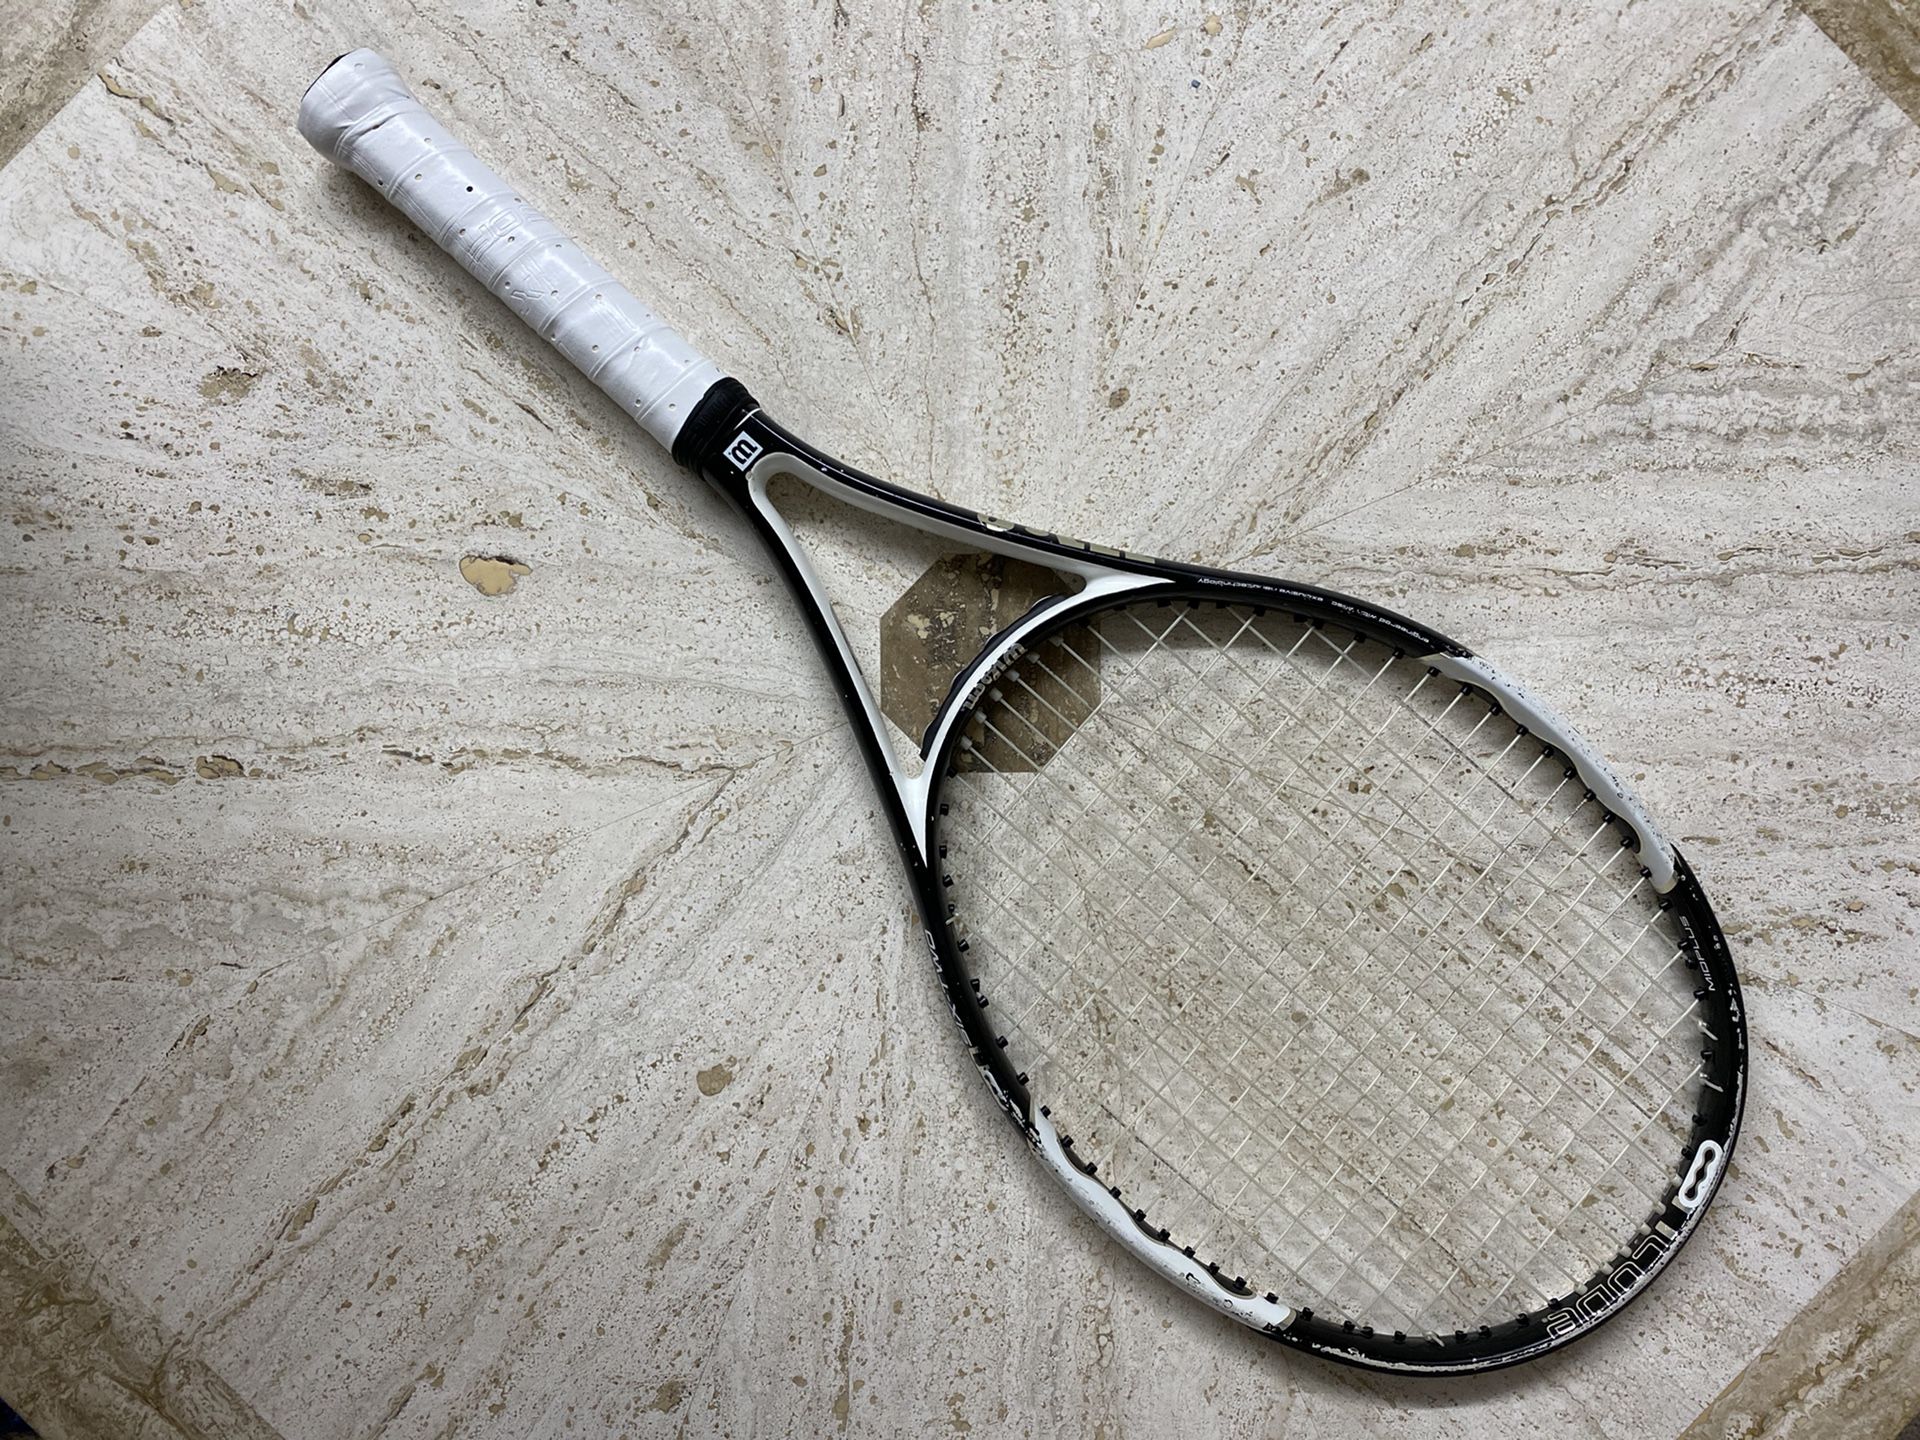 Wilson N code tennis racket w/ Babolat pro hurricane